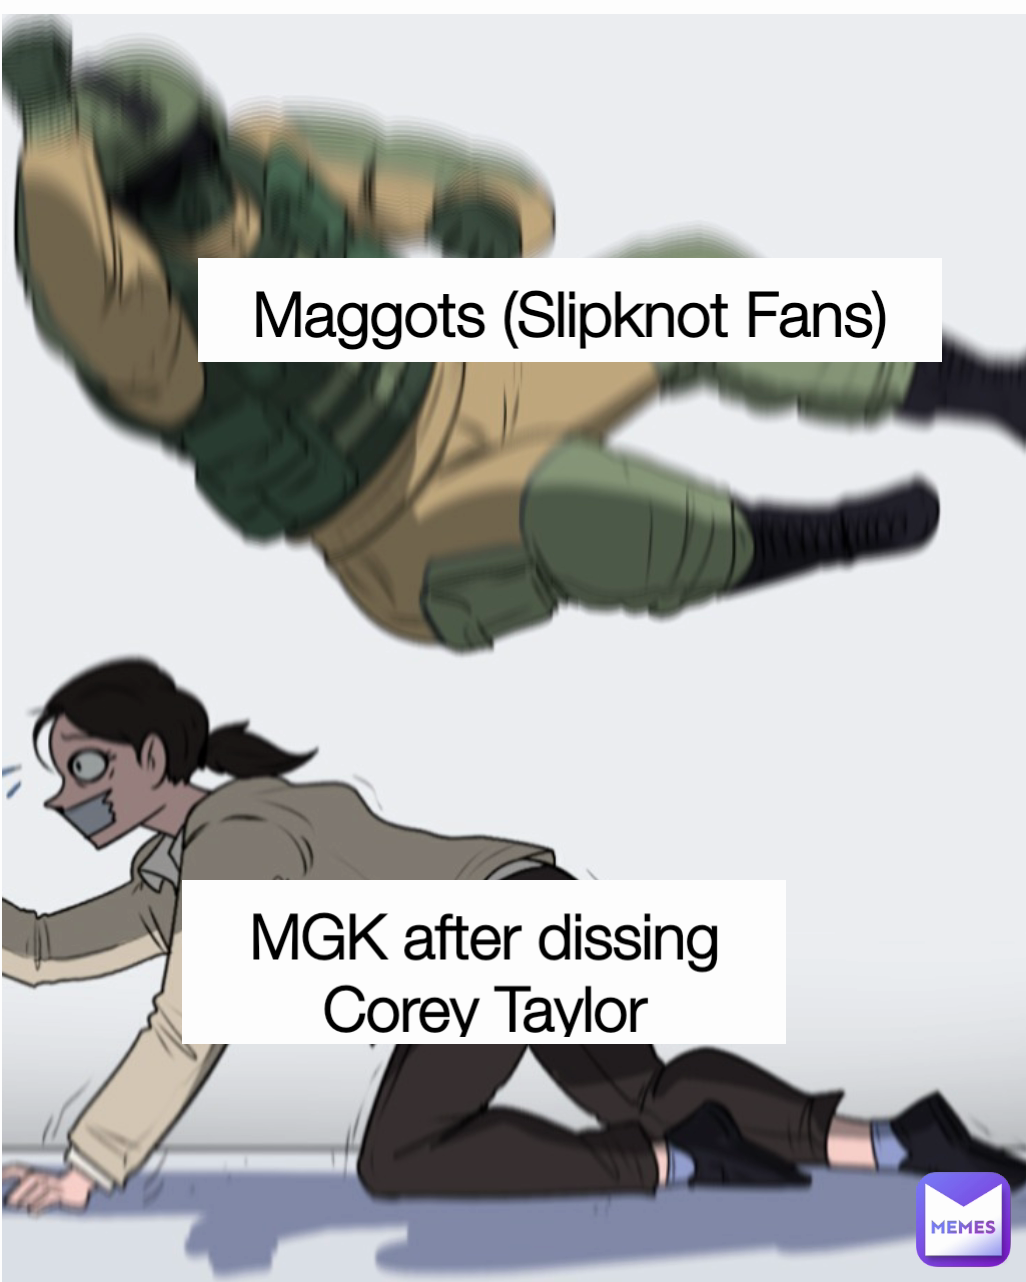 MGK after dissing Corey Taylor Maggots (Slipknot Fans)